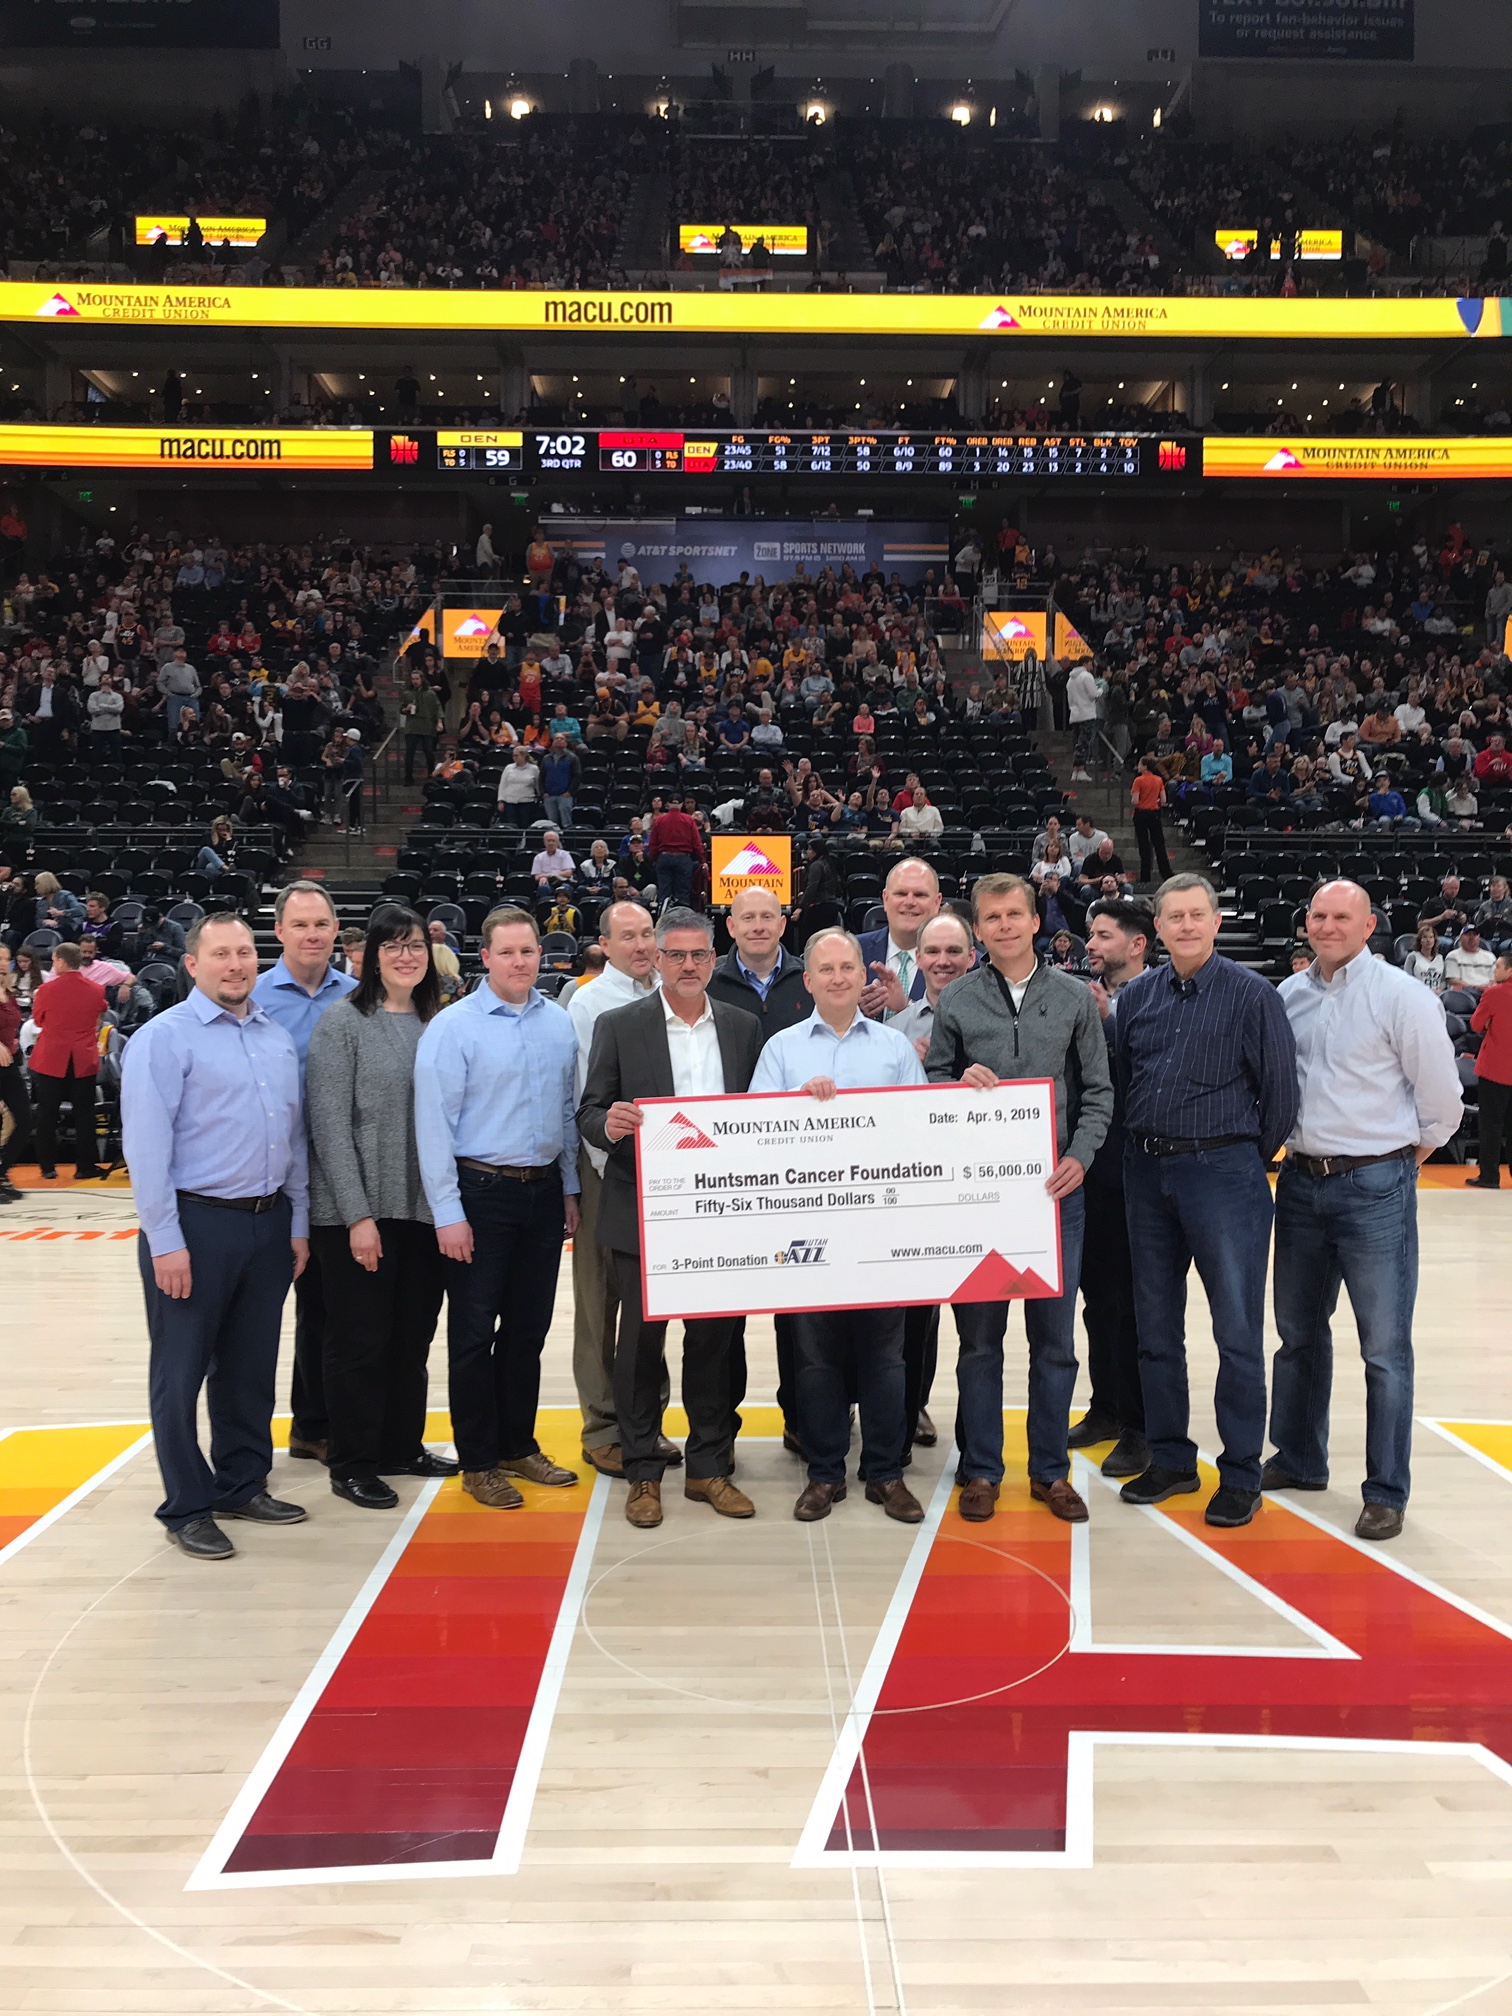 Mountain America senior leadership team presents a $56,000 check to David Huntsman, who represented Huntsman Cancer Foundation, at the Utah Jazz game on April 9, 2019.